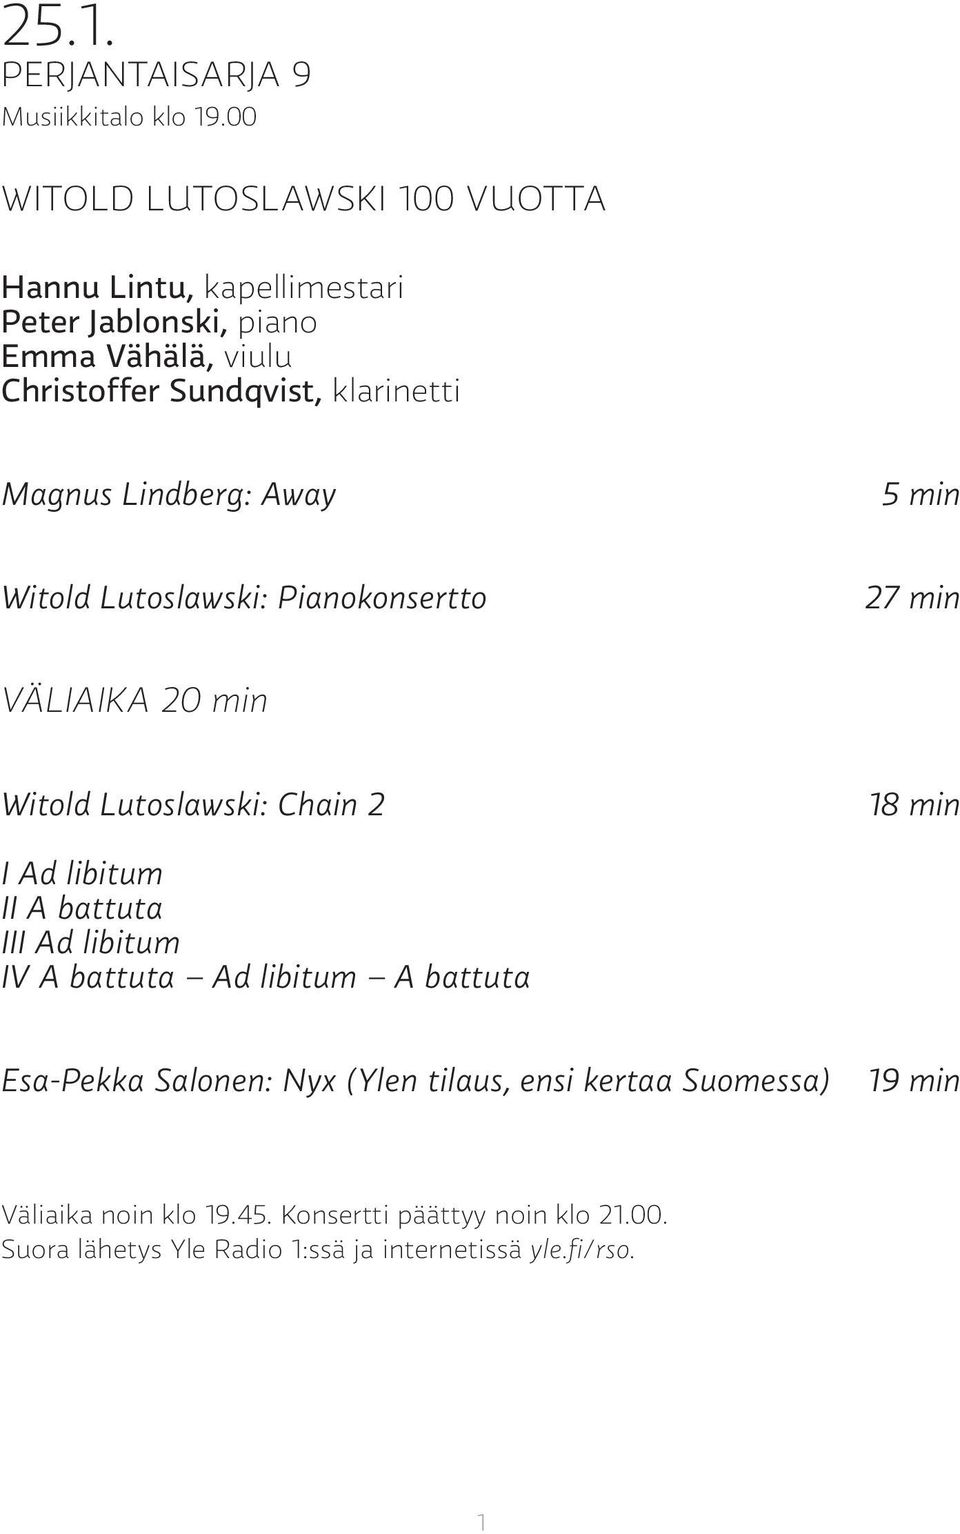 Magnus Lindberg: Away 5 min Witold Lutoslawski: Pianokonsertto 27 min VÄLIAIKA 20 min Witold Lutoslawski: Chain 2 18 min I Ad libitum II A